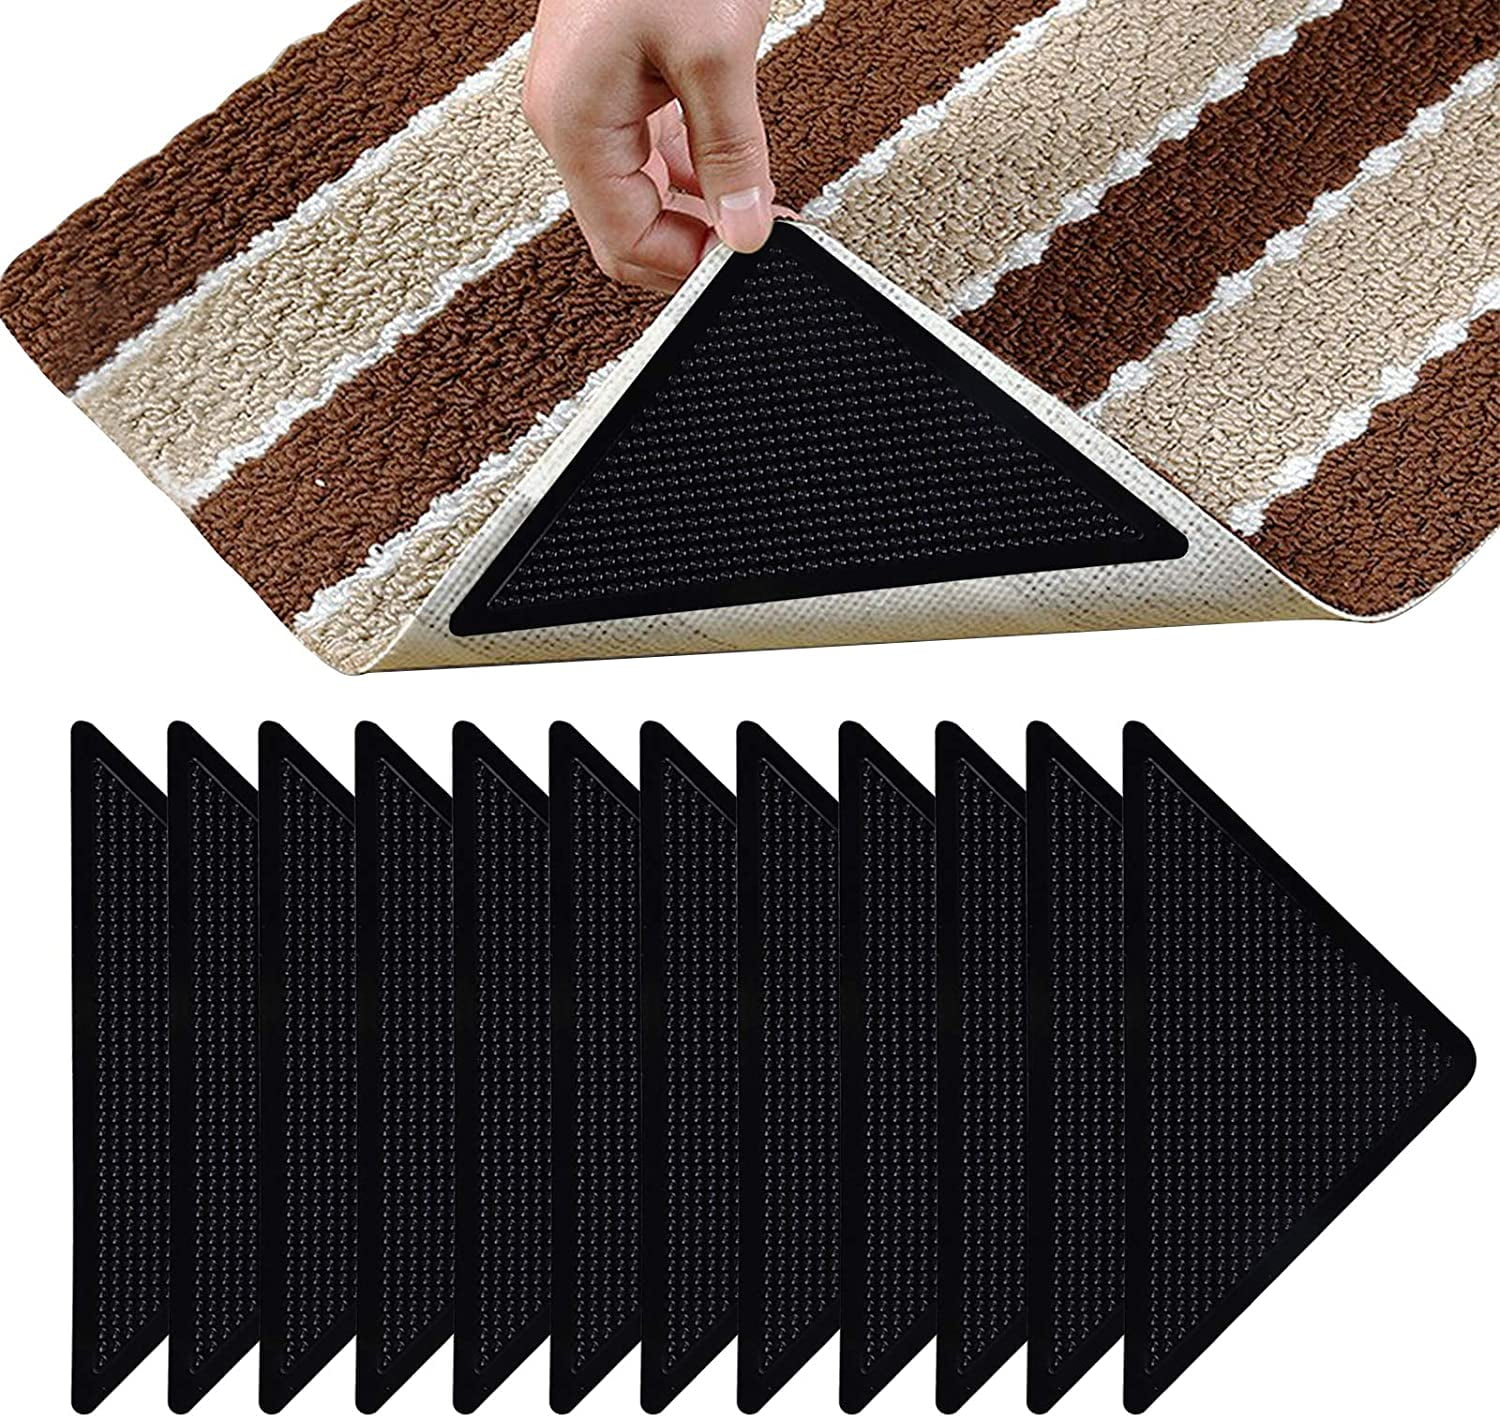 8x Rug Grippers Carpet Mat Floor Non Slip Skid Curling Washable Reusable Grip UK 